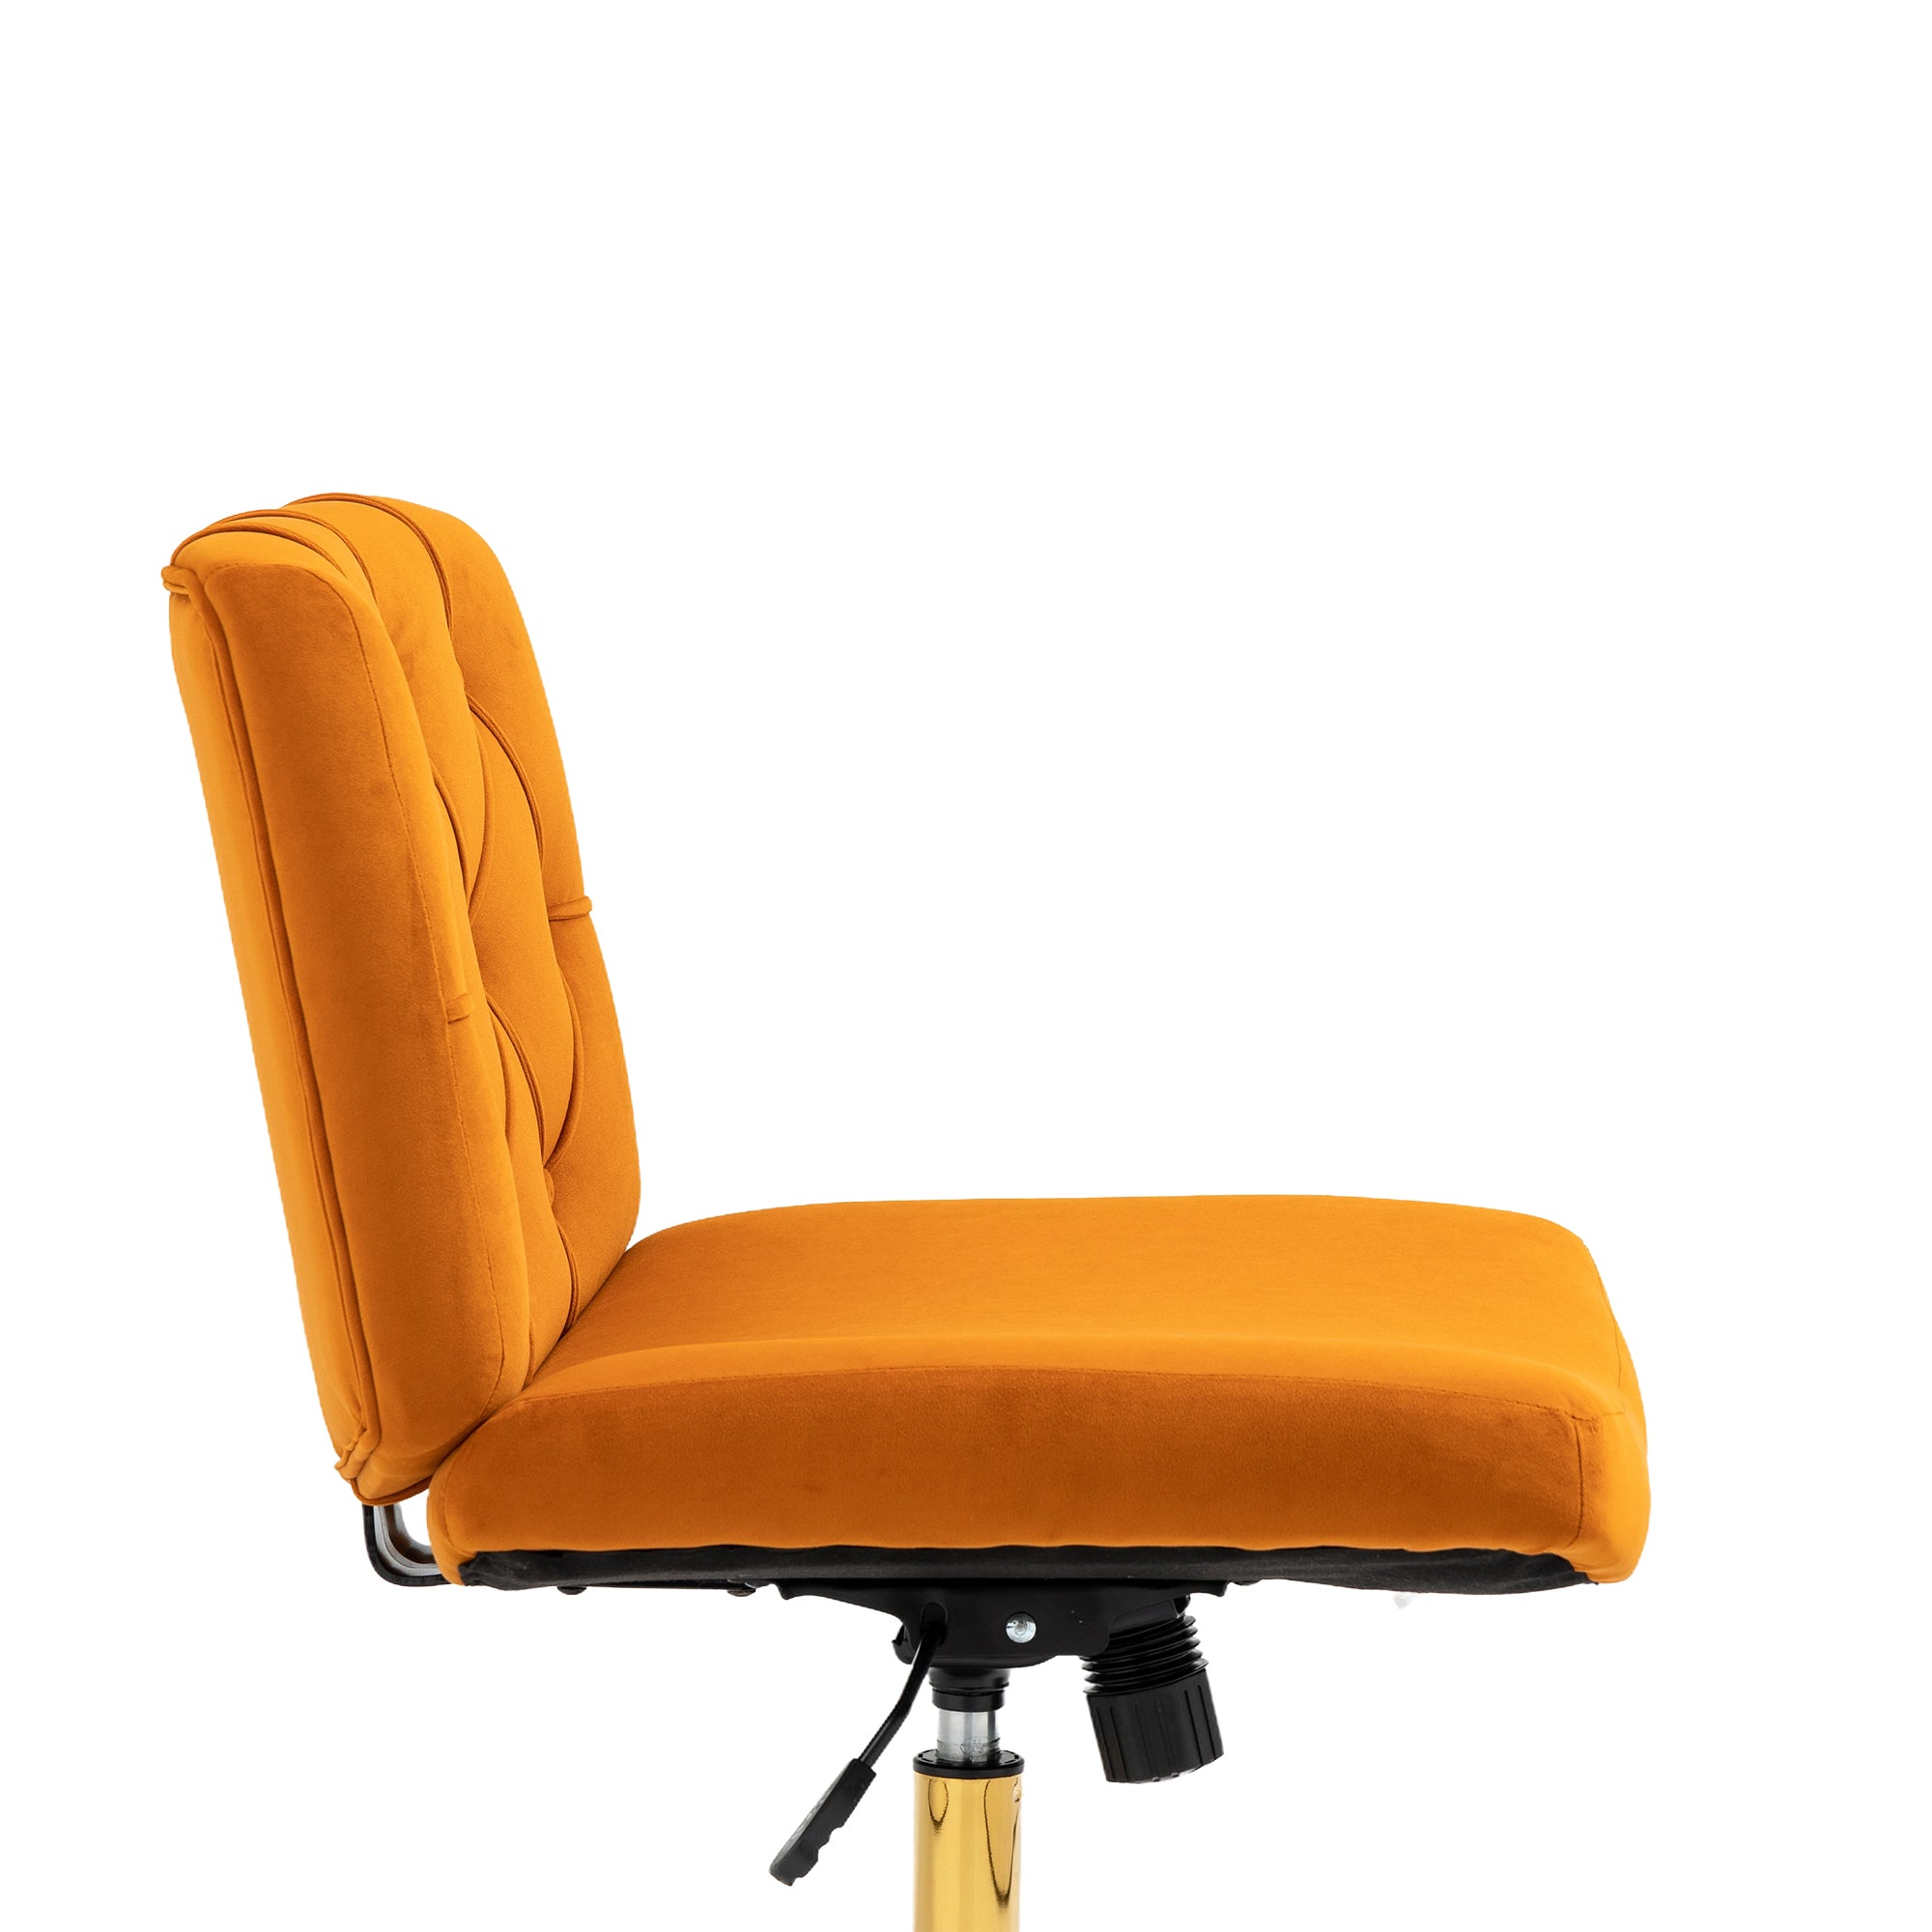 Modern Adjustable Home Office Chair, Executive Chair Swivel Task,